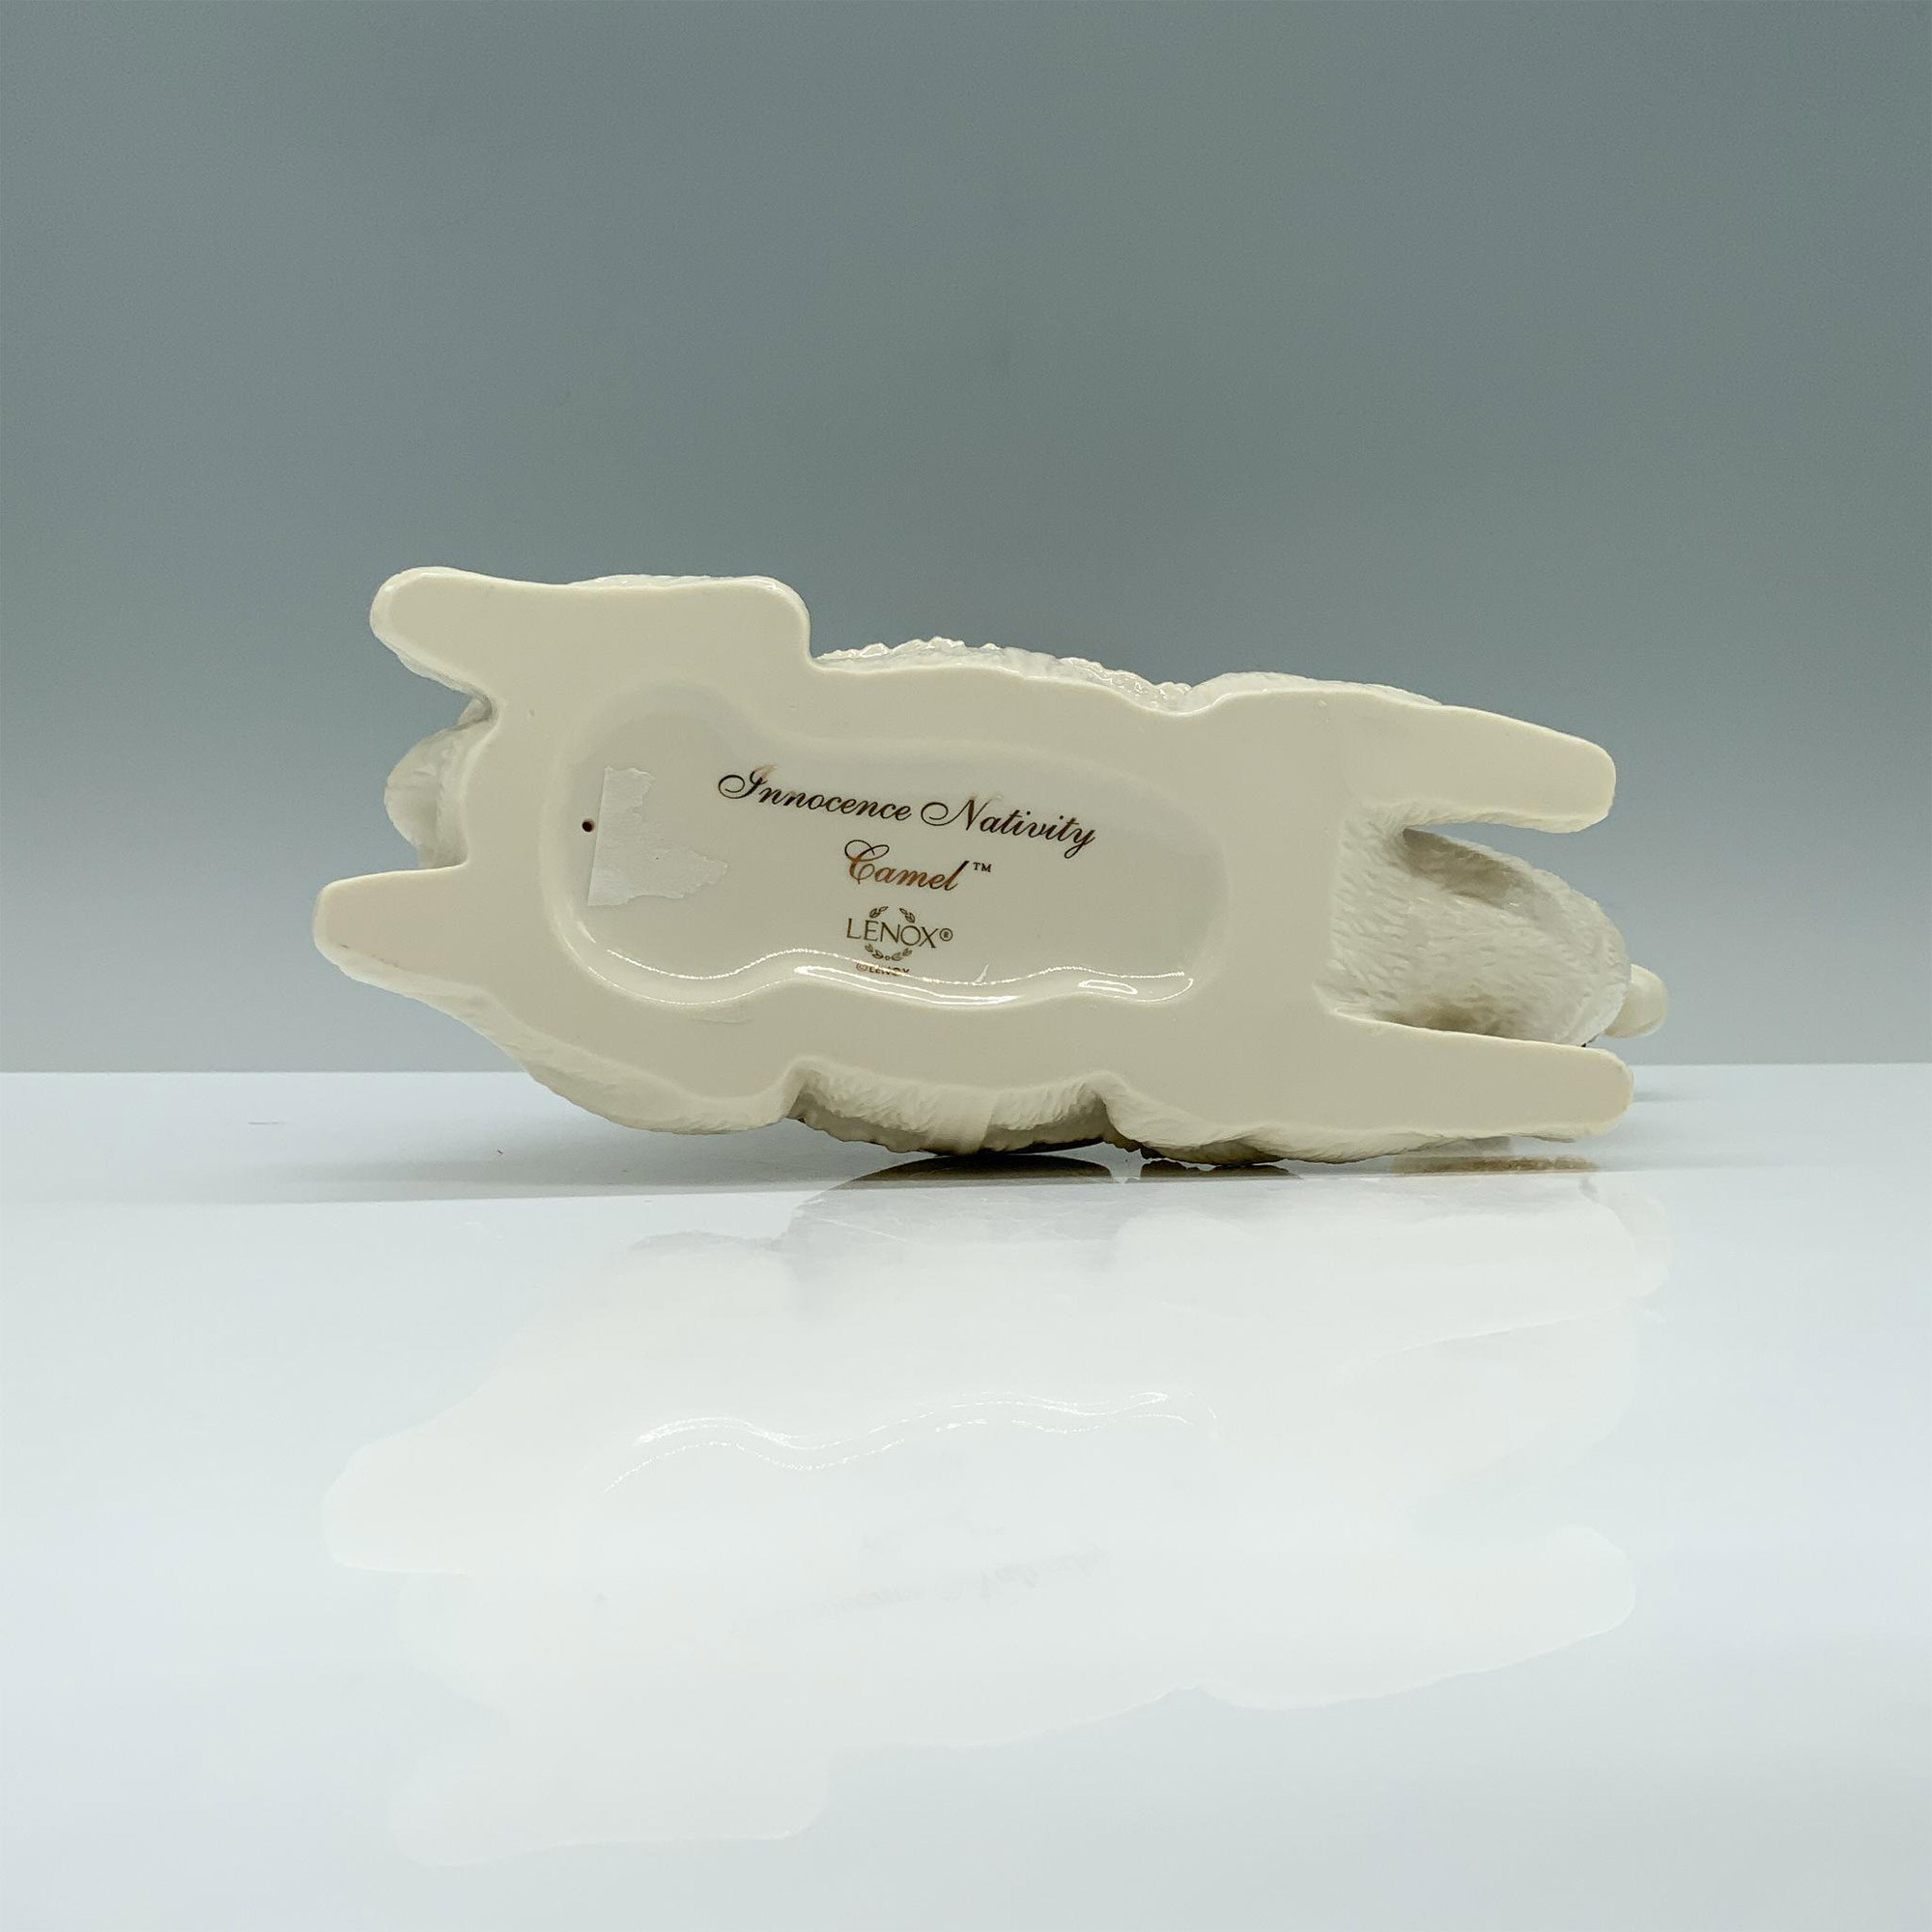 Lenox Porcelain Figurine, Innocence Nativity Camel - Image 3 of 4